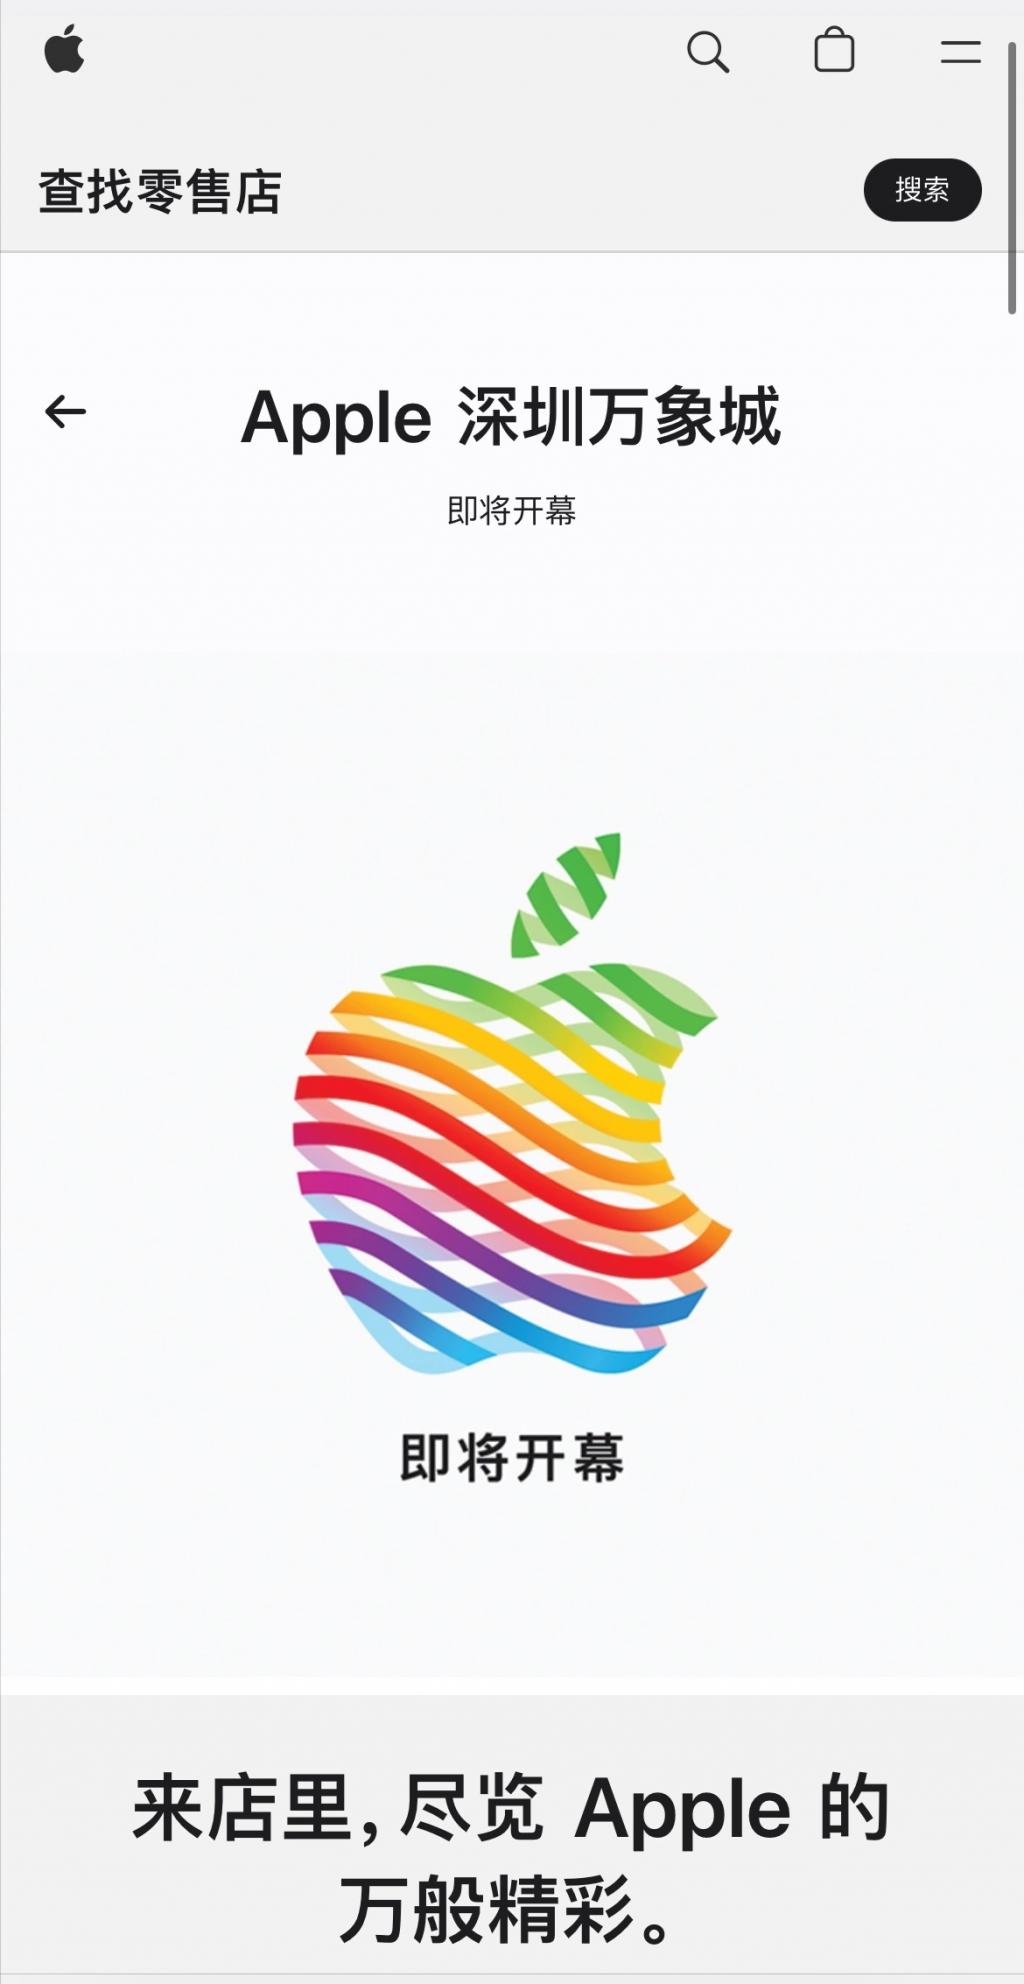 深圳第二家 Apple Store 即将开幕